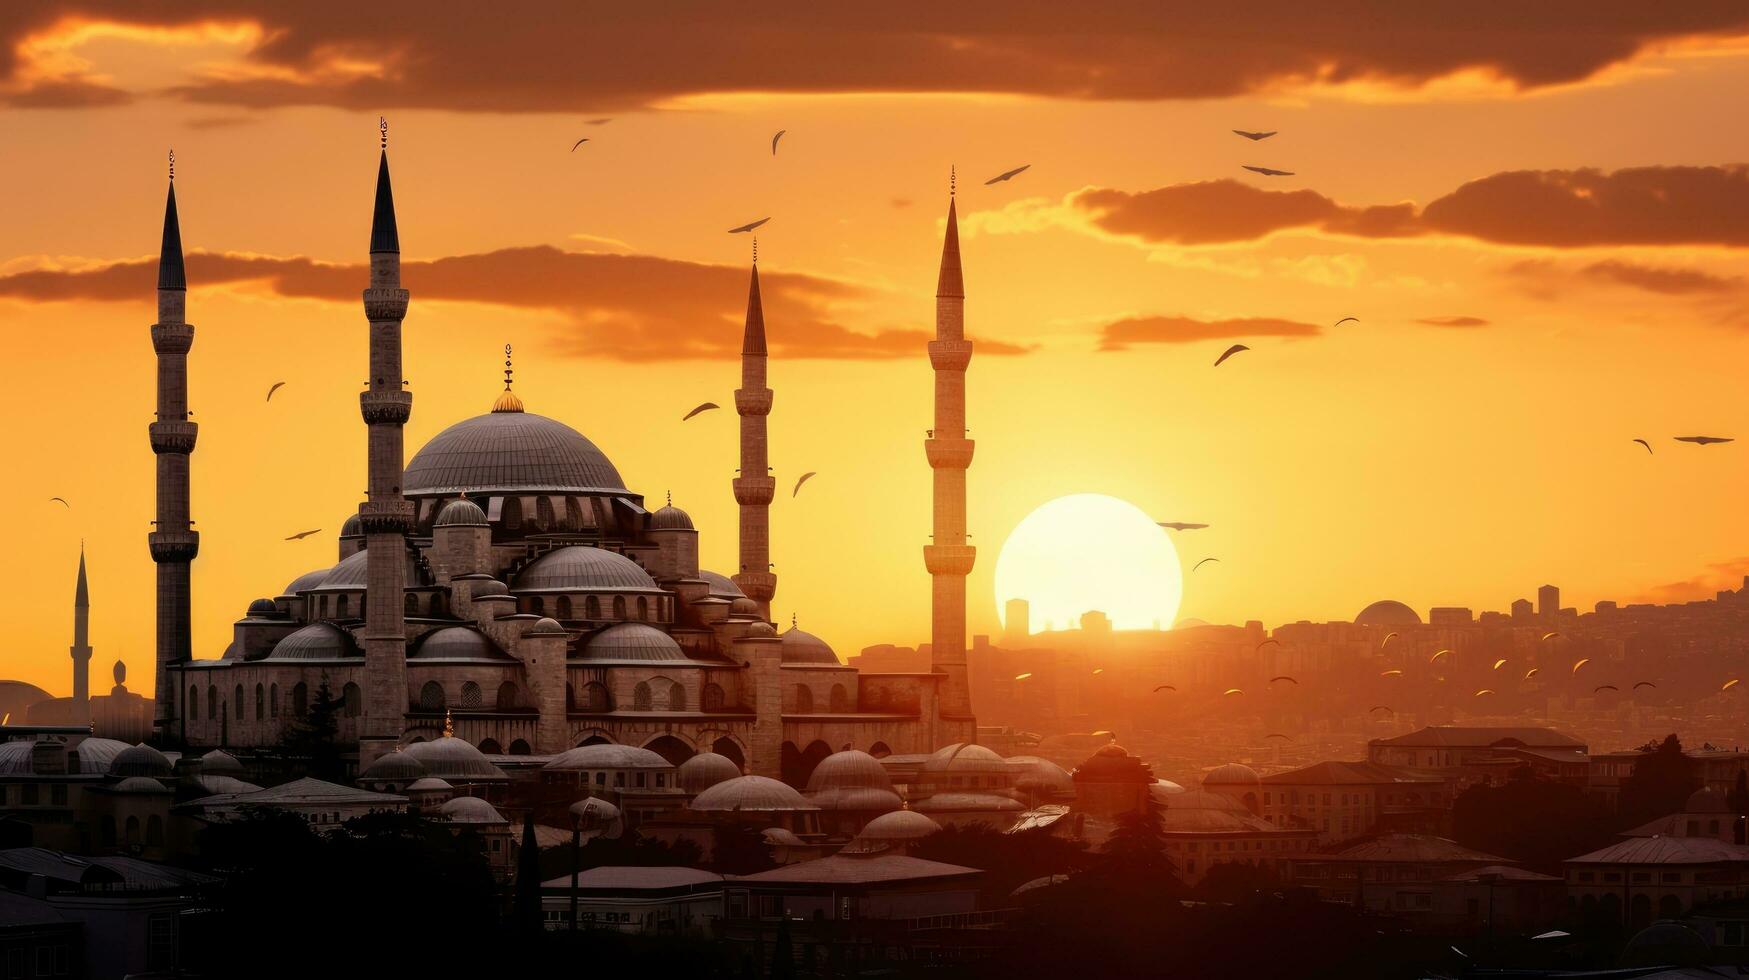 beroemd historisch poef moskee in Istanbul kalkoen populair toerisme bestemming Bij zonsondergang foto